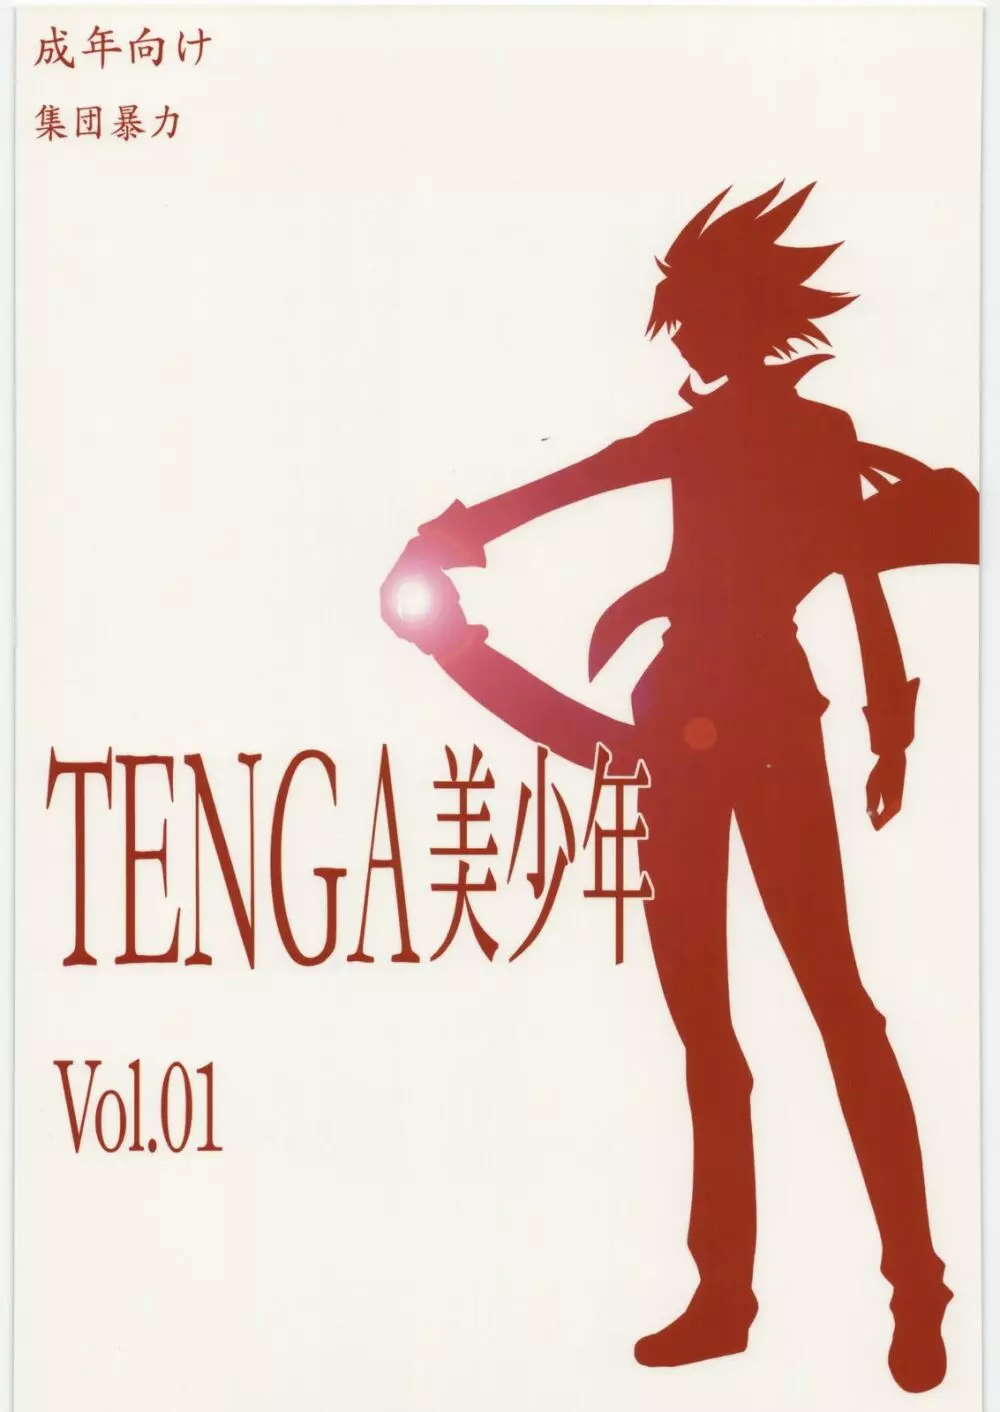 TENGA美少年 Vol.01